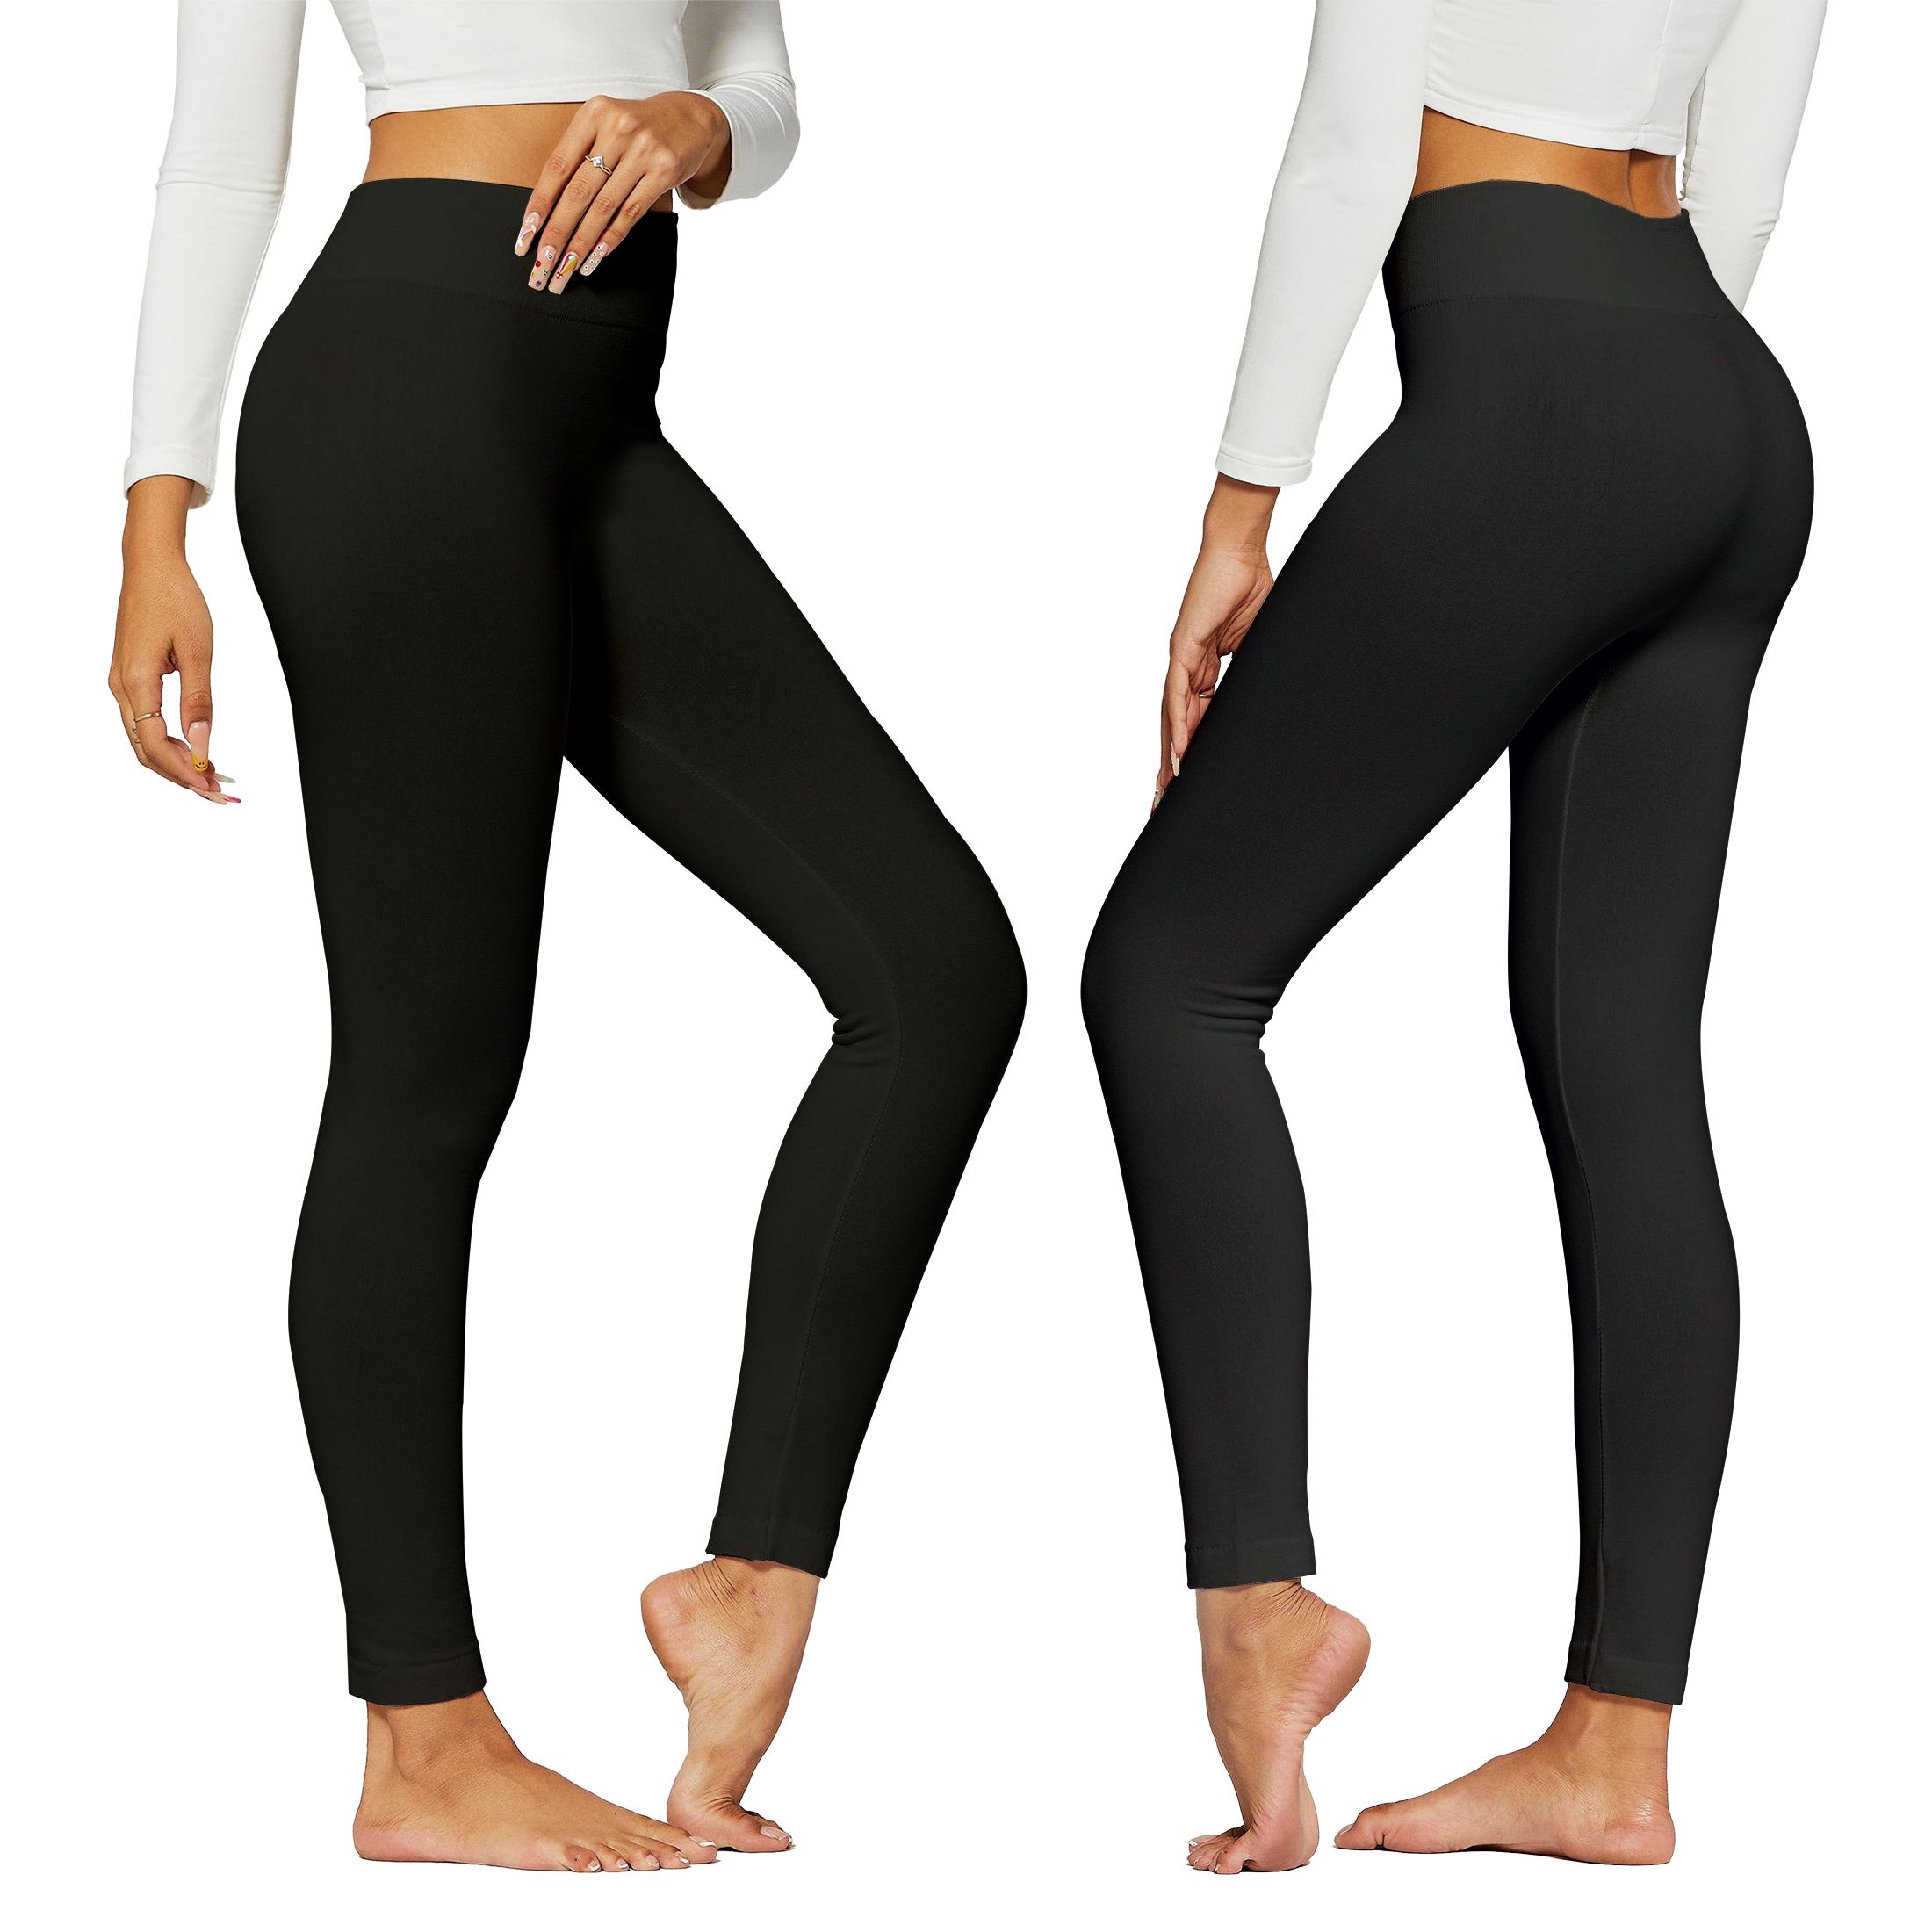 Women's Premium Quality High-Waist Fleece Lined Leggings (Plus Size Available) - Gray, Large/X-Large